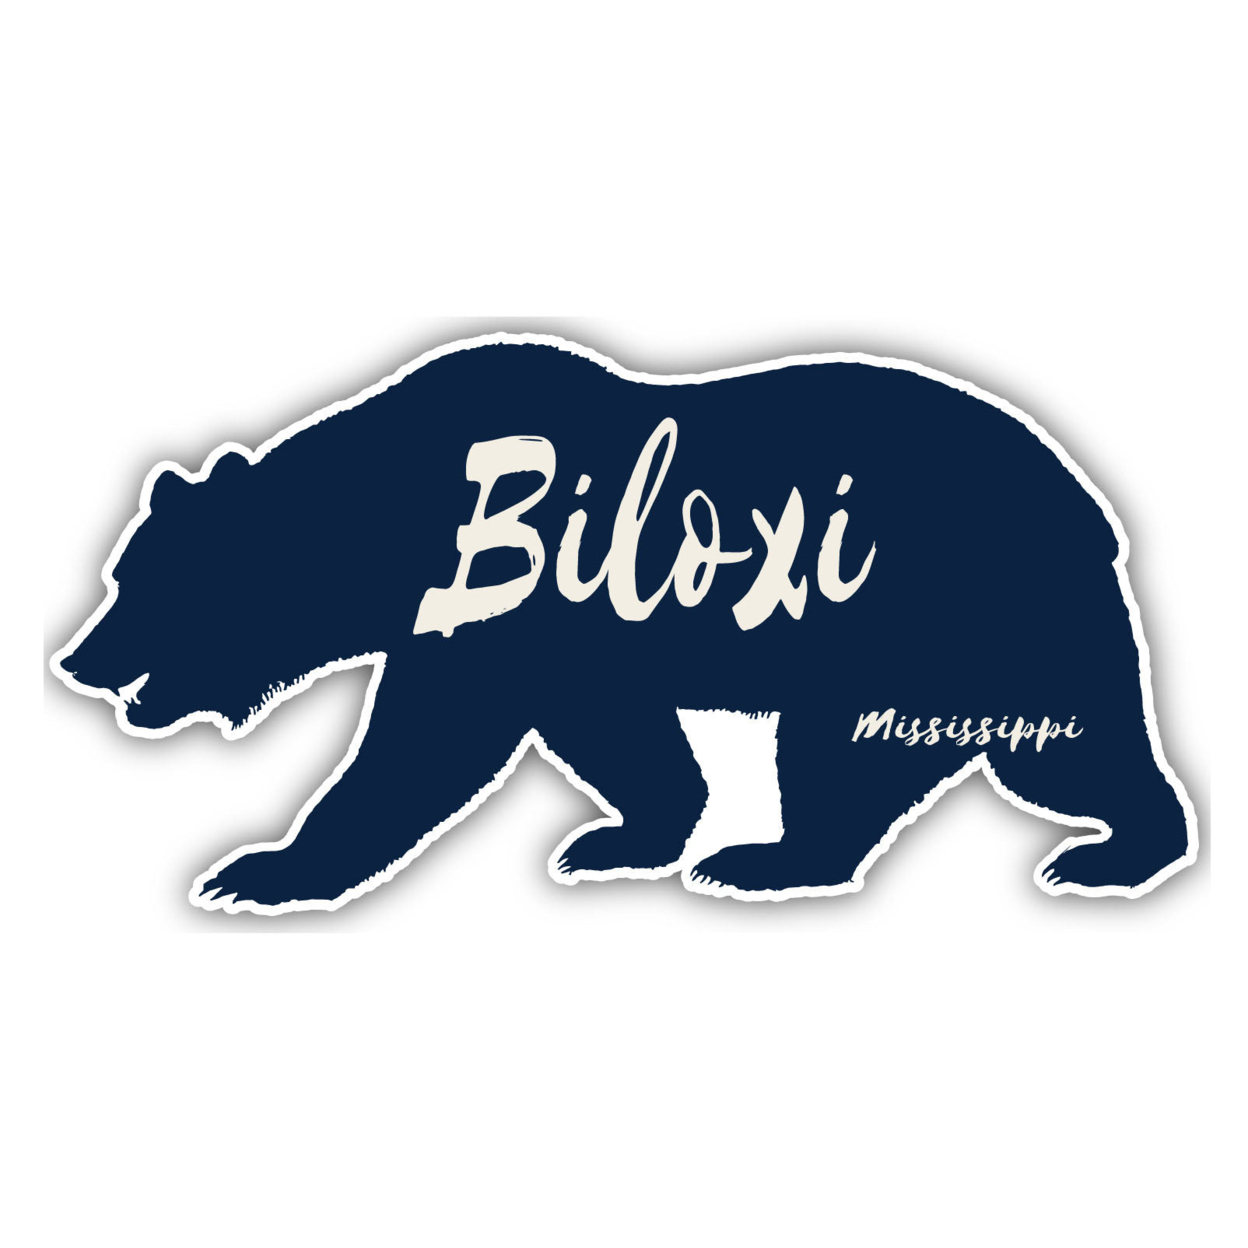 Biloxi Mississippi Souvenir Decorative Stickers (Choose Theme And Size) - Single Unit, 6-Inch, Tent